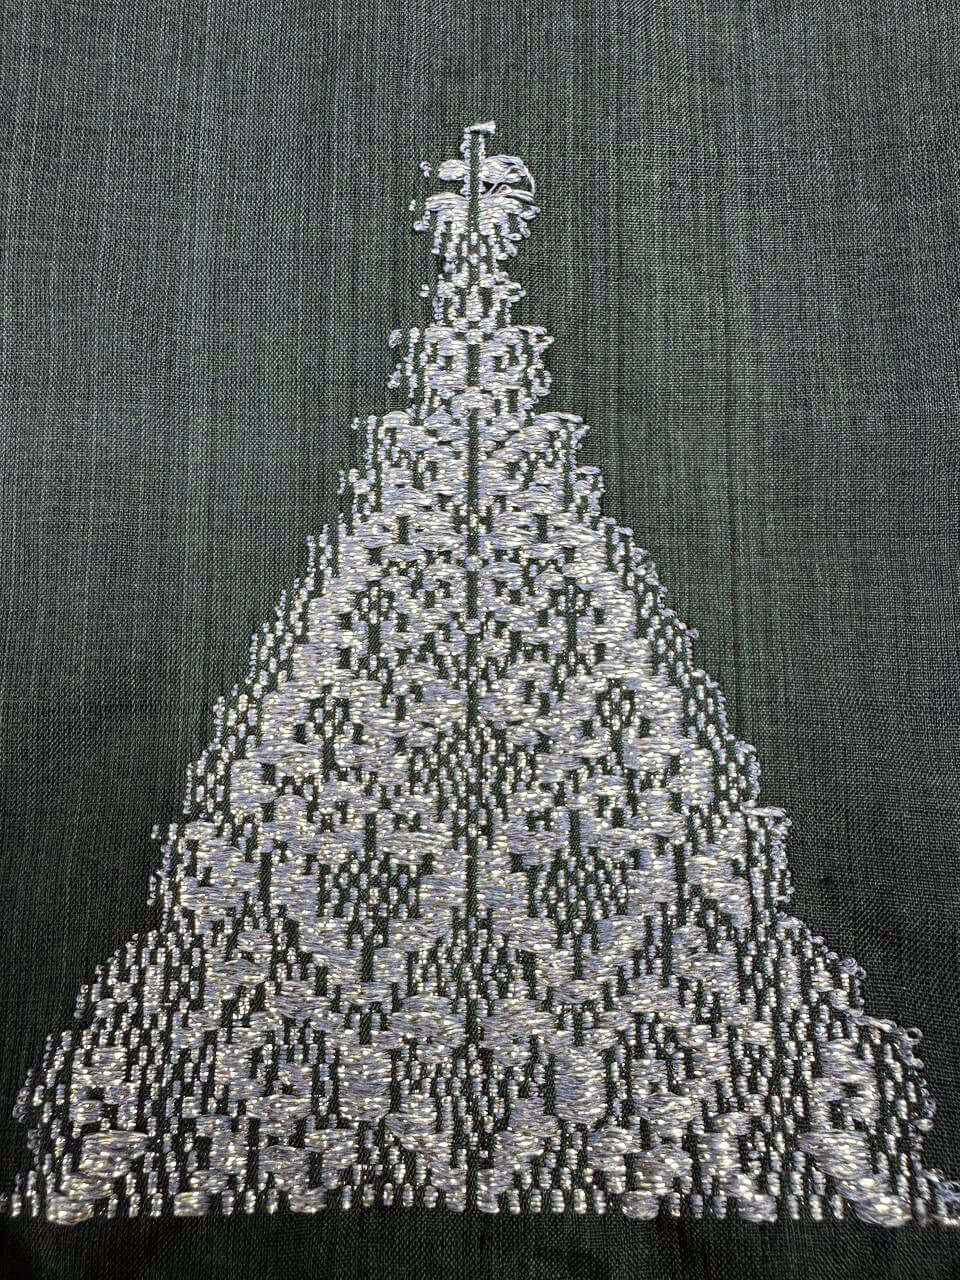 Ranee's Cloth (Black) handwoven silk organza songket shawl textile